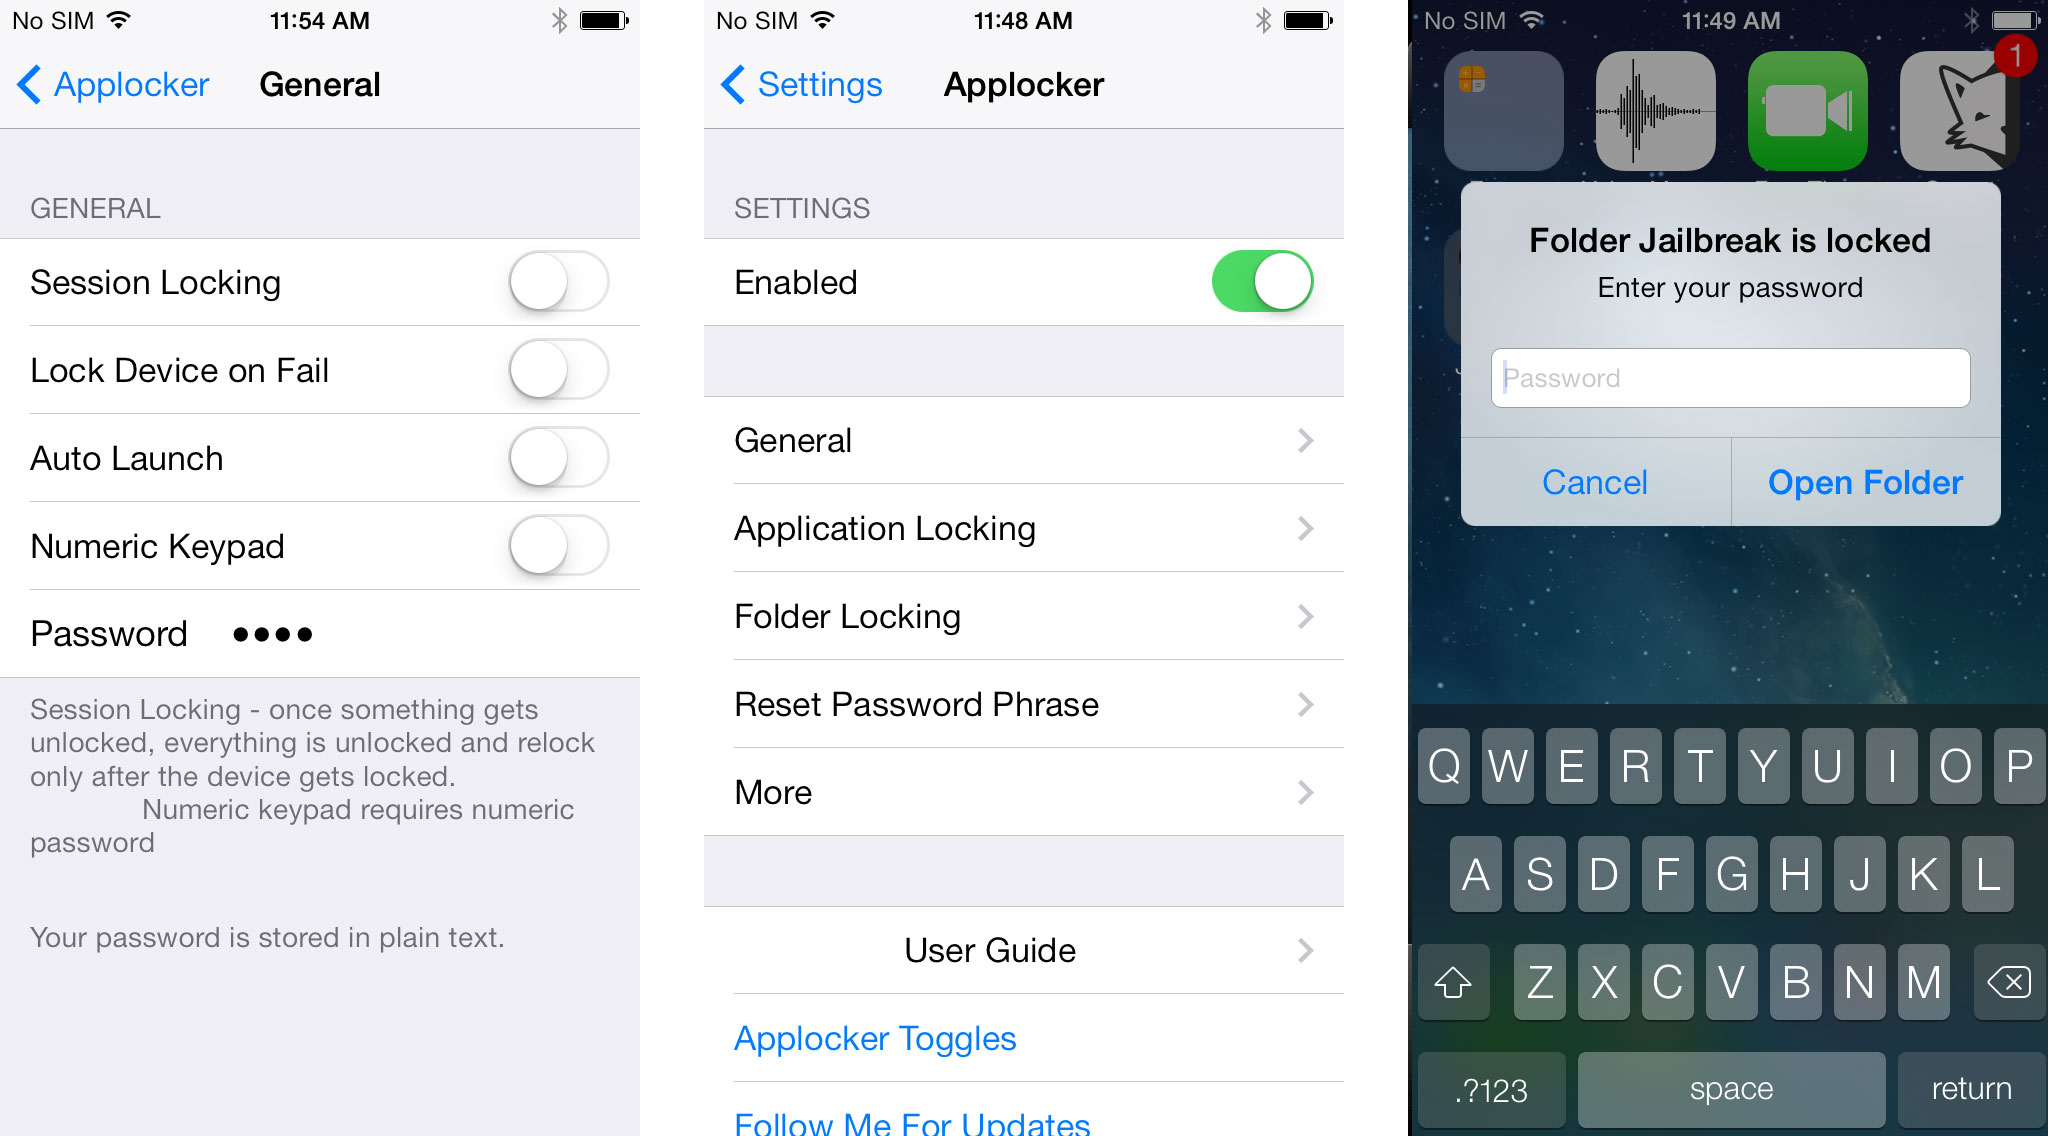 Best jailbreak tweaks that make iOS 7 even better: Applocker